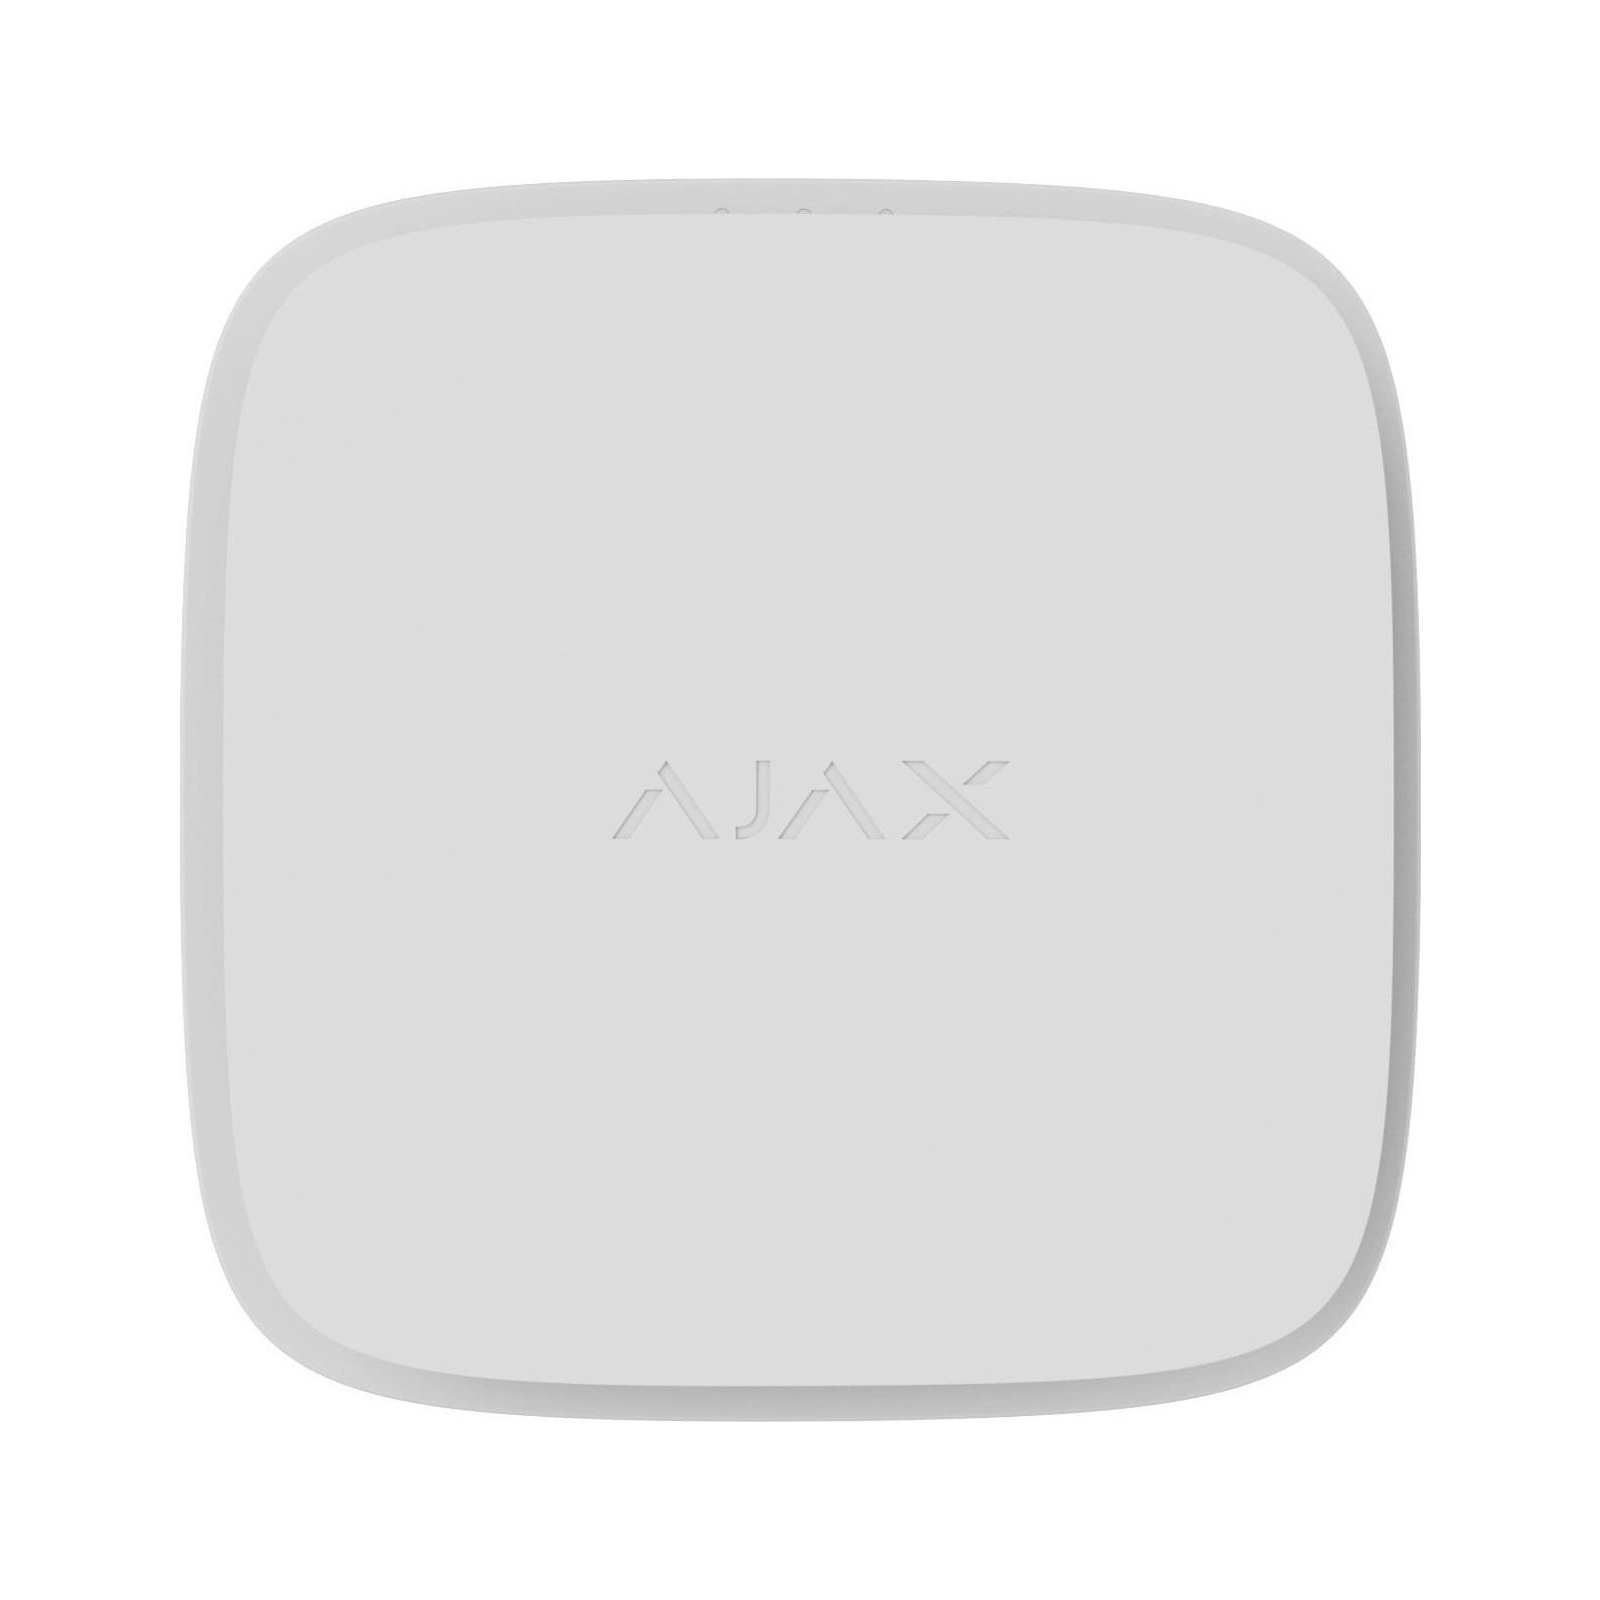 Датчик дыма Ajax FireProtect 2 SB Heat white